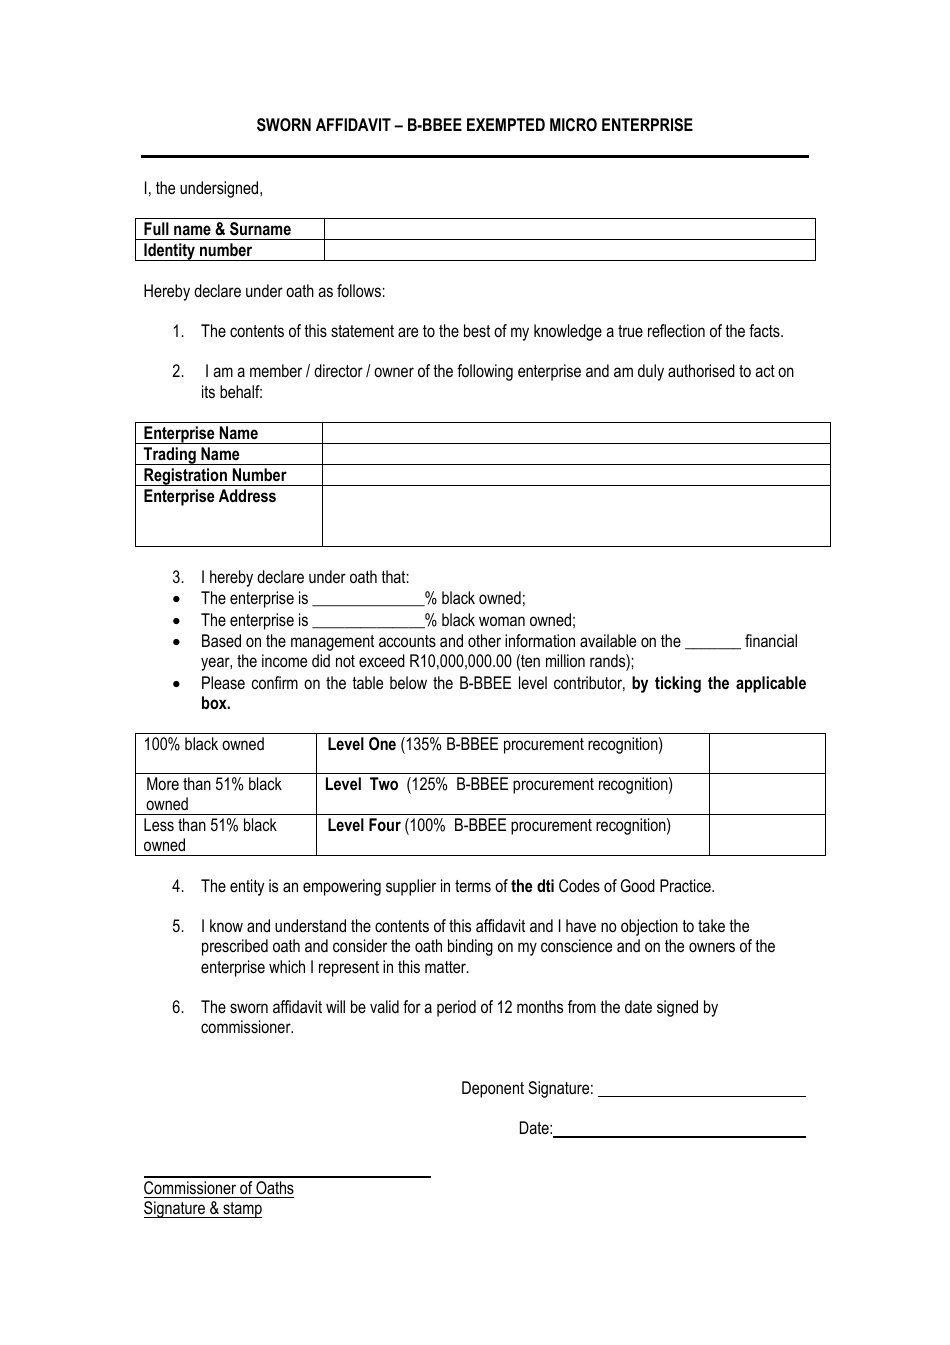 B-BBEE Exempted Micro Enterprise Sworn Affidavit Form, Page 1